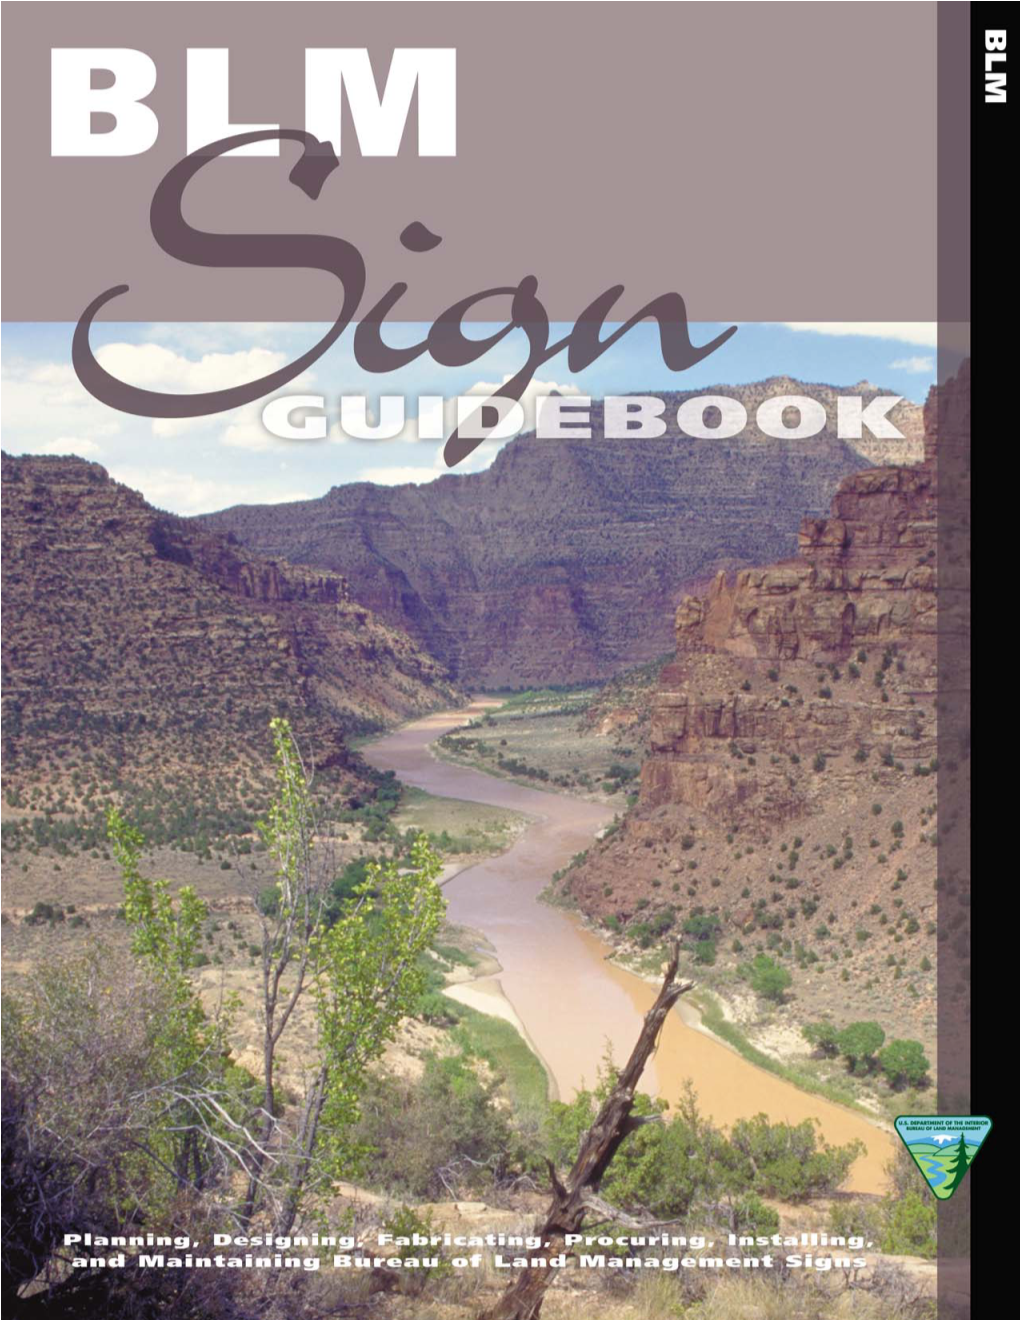 Bureau of Land Management Sign Guide Book